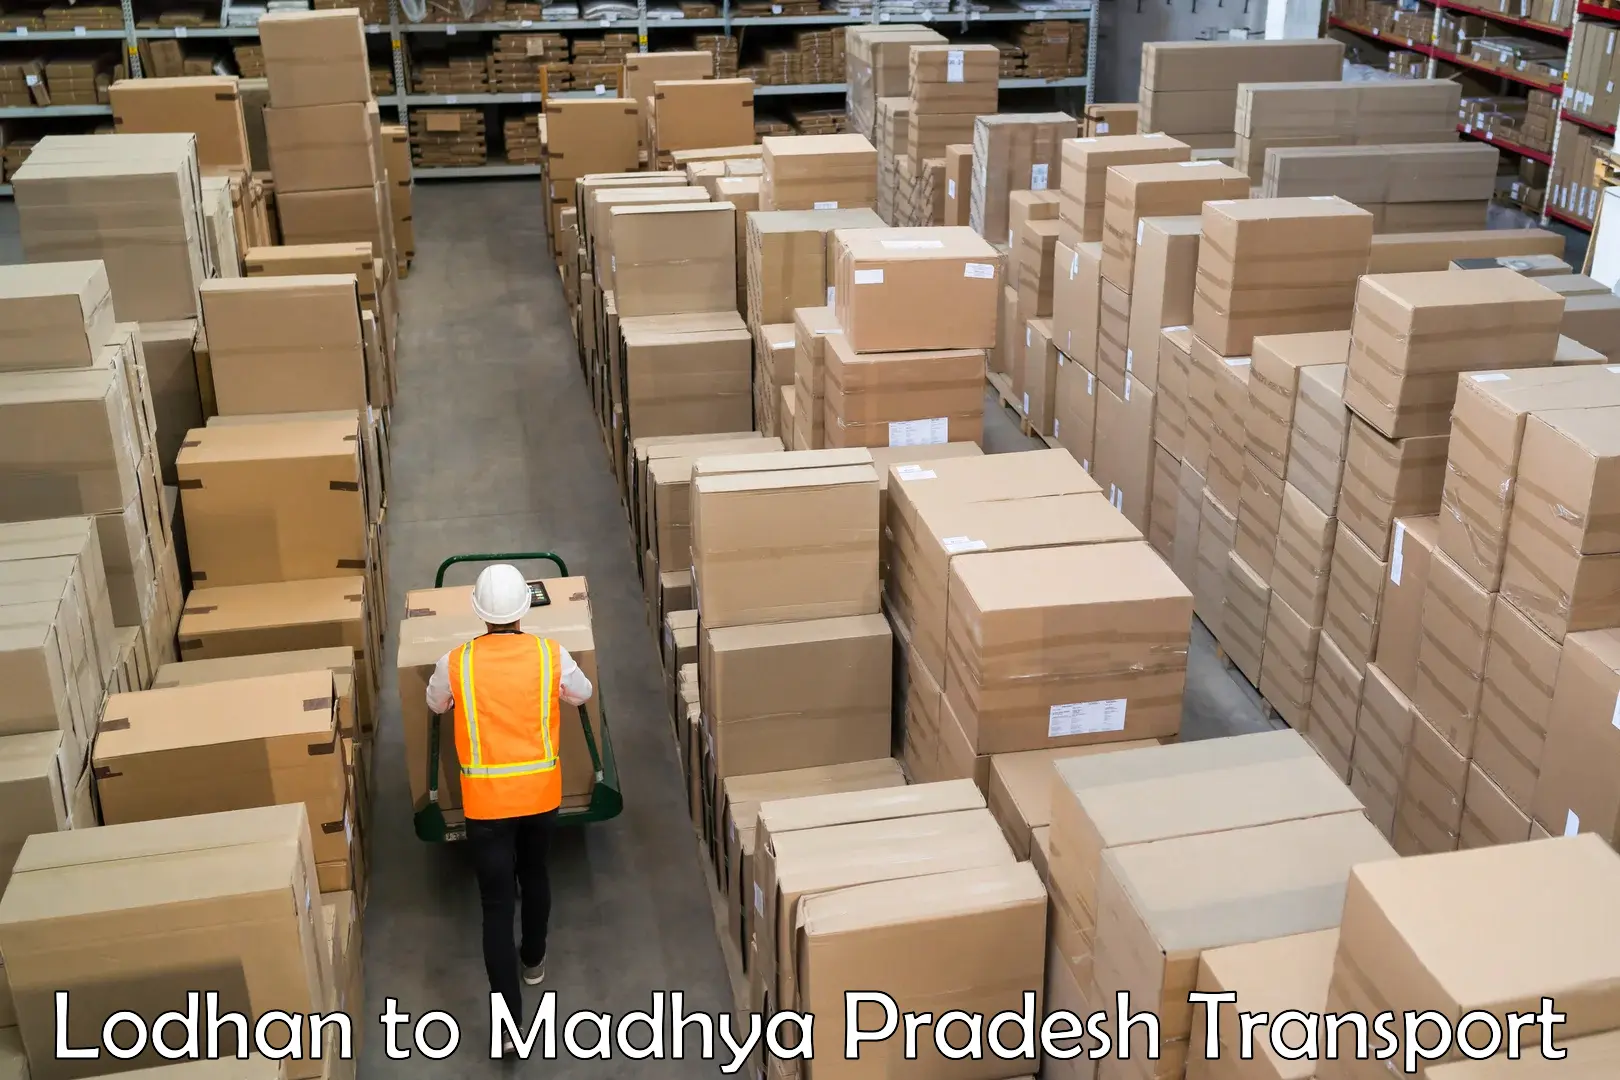 Truck transport companies in India Lodhan to Shivpuri